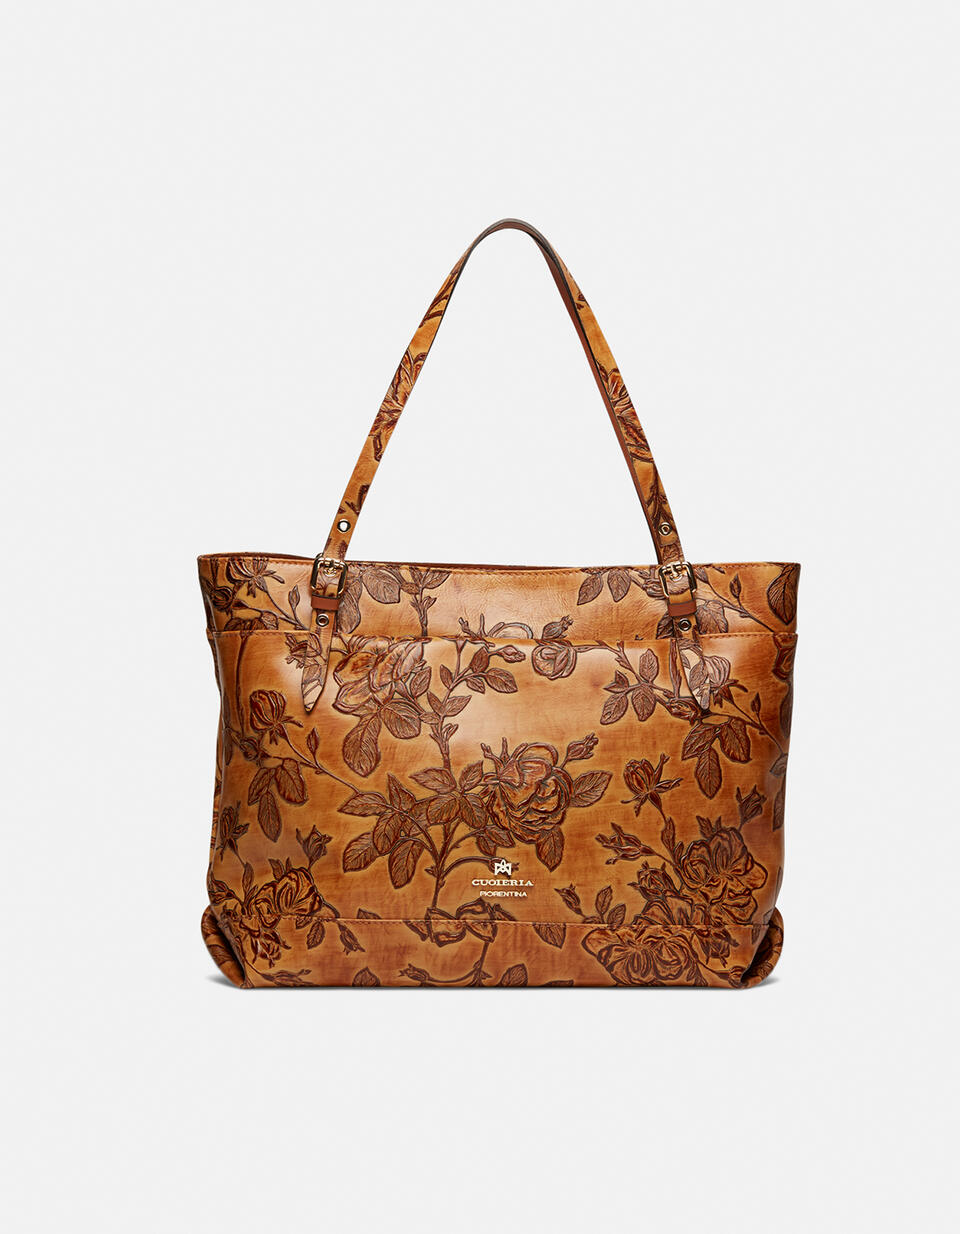 Big Mimì shopping bag keystone design - SHOPPING - WOMEN'S BAGS | bags  - SHOPPING - WOMEN'S BAGS | bagsCuoieria Fiorentina